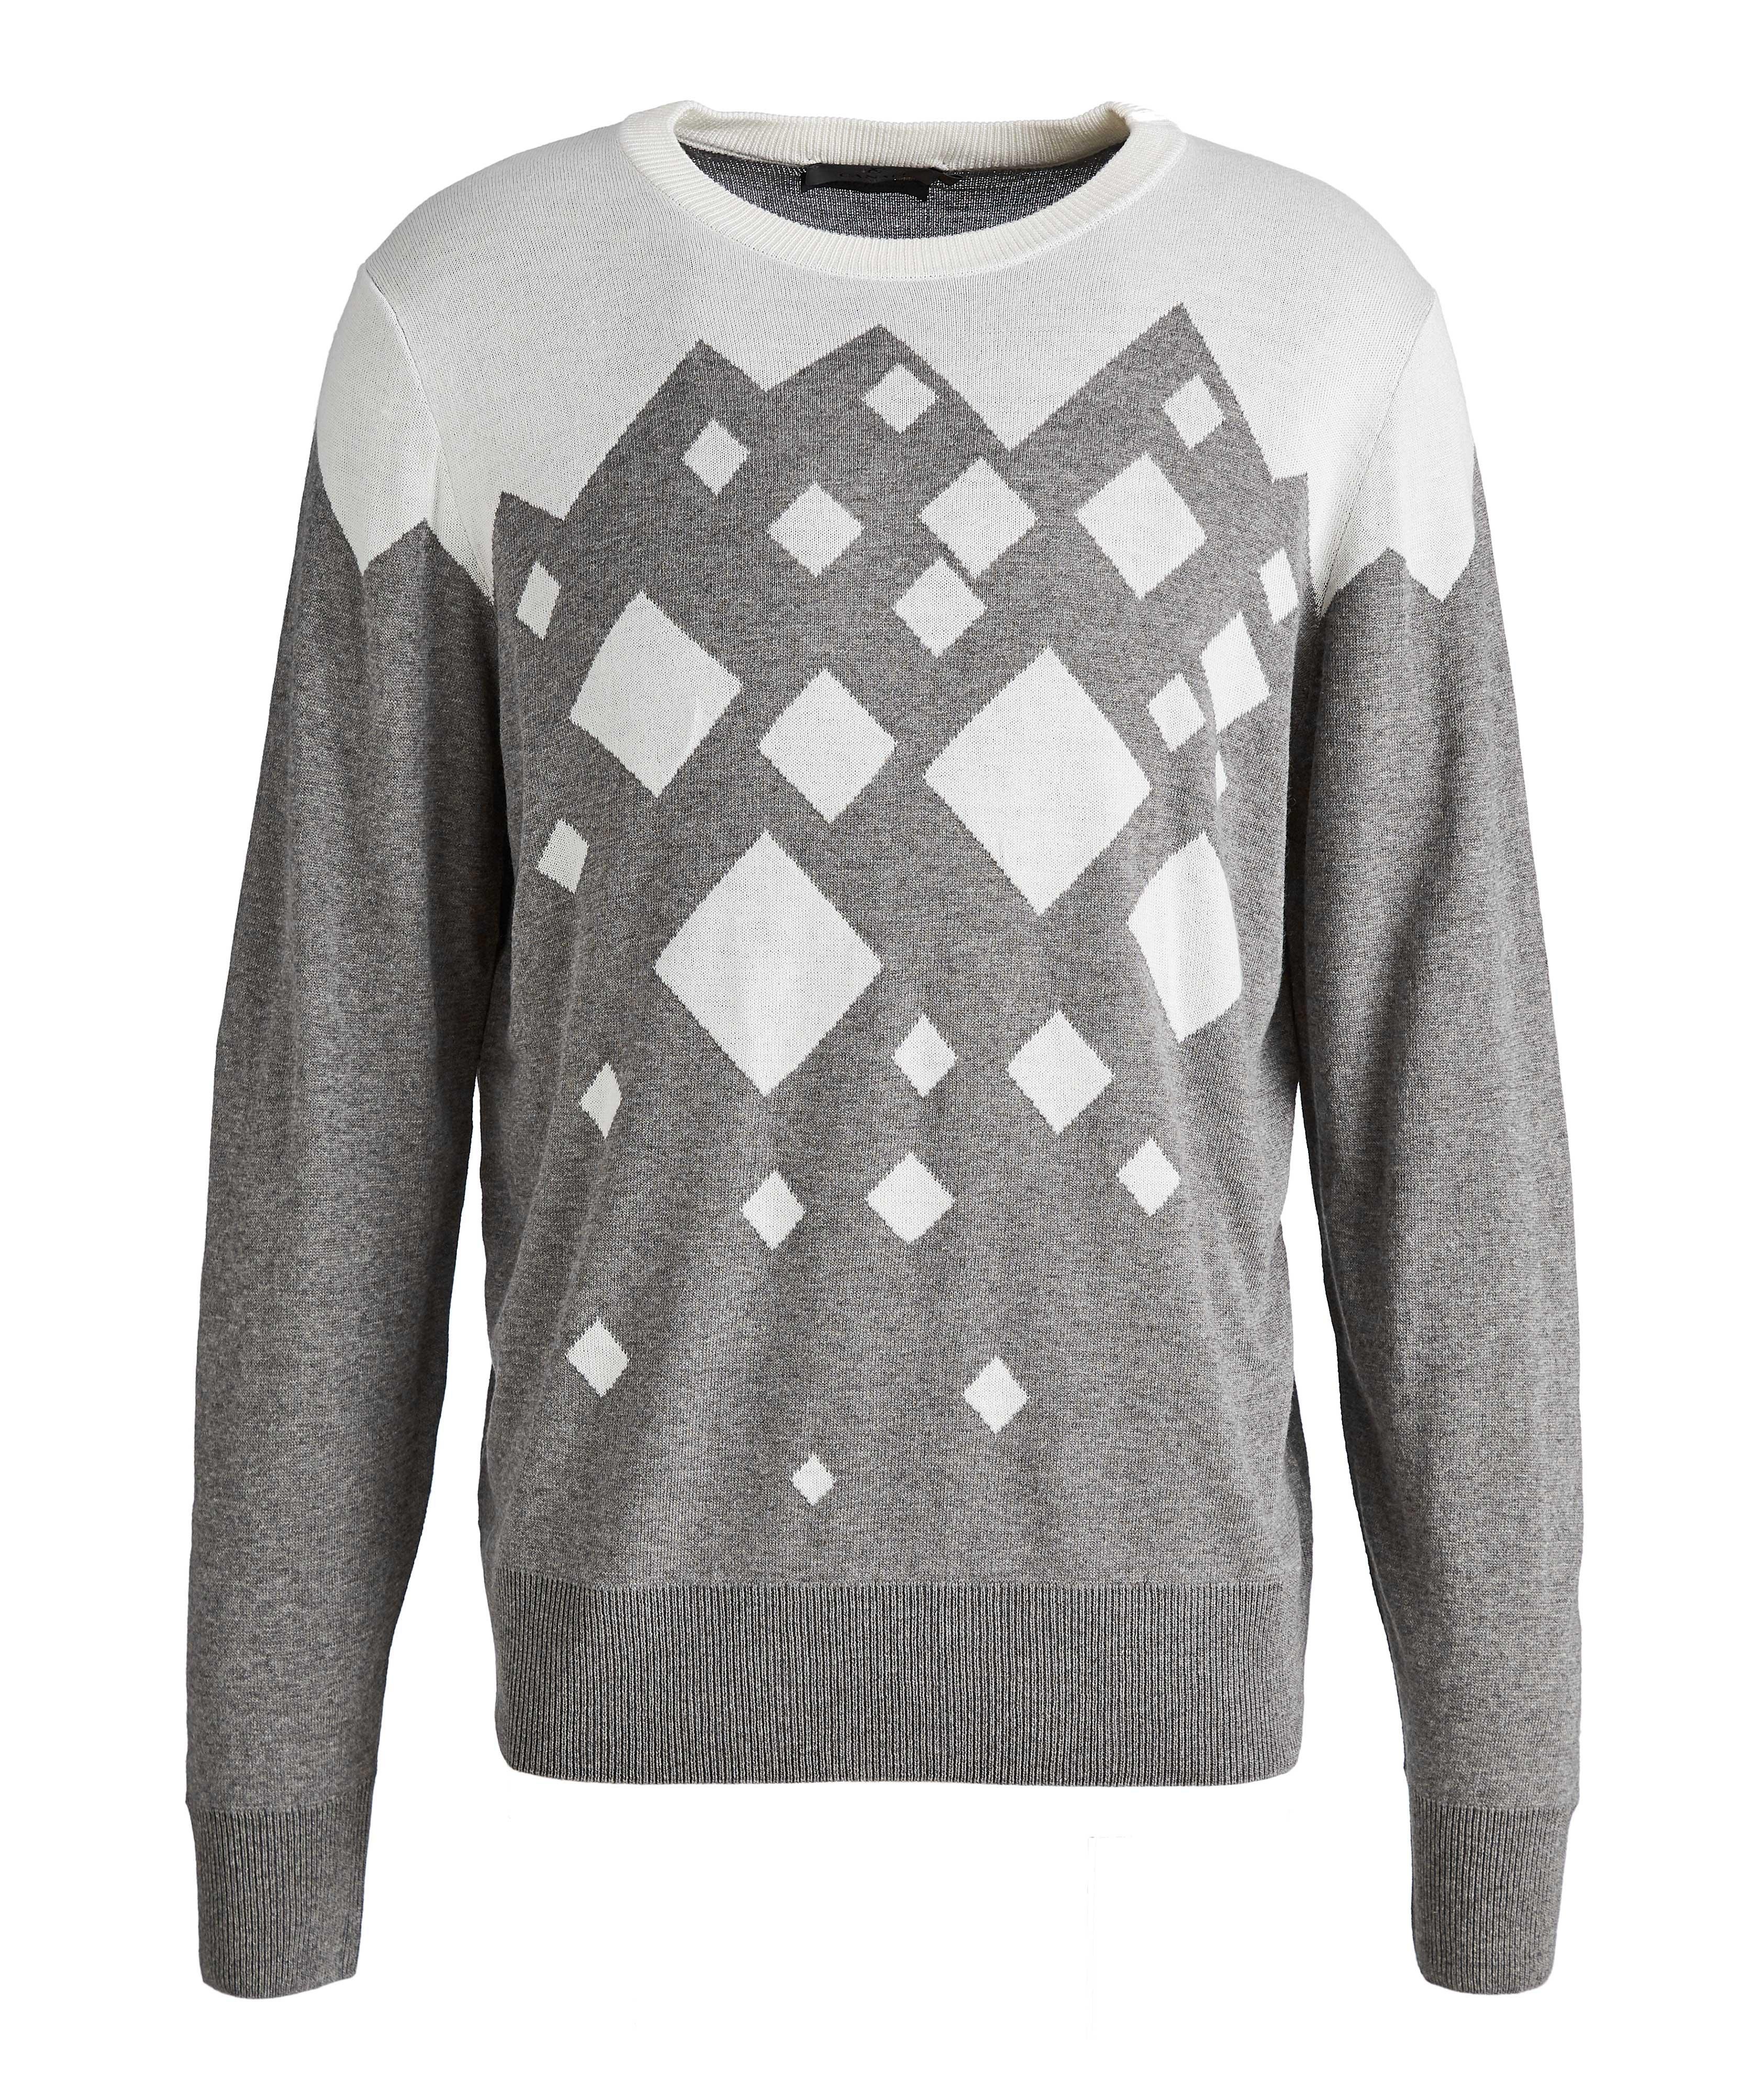 Diamond Cotton-Blend Sweater image 0